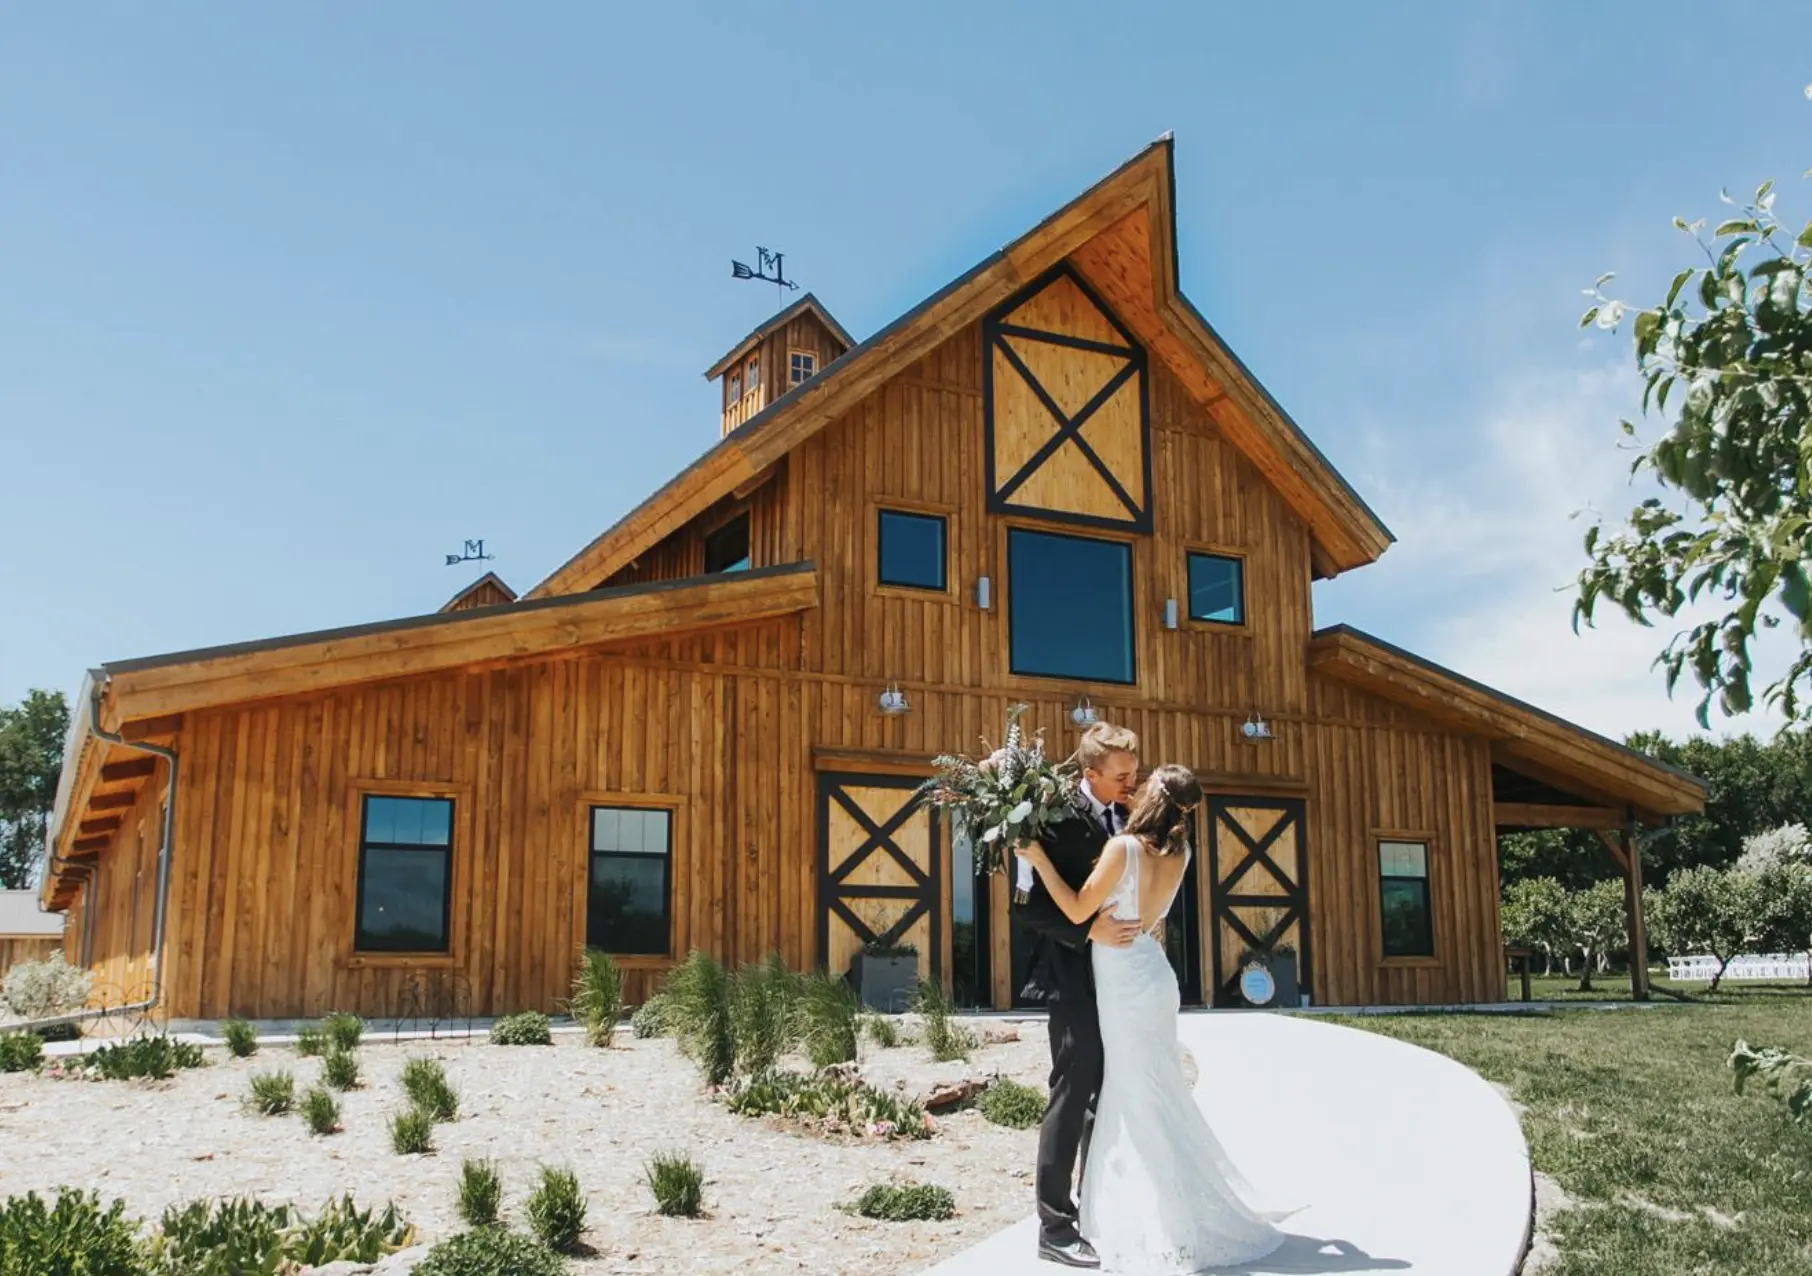 One of the best south dakota wedding venues The Meadow Barn